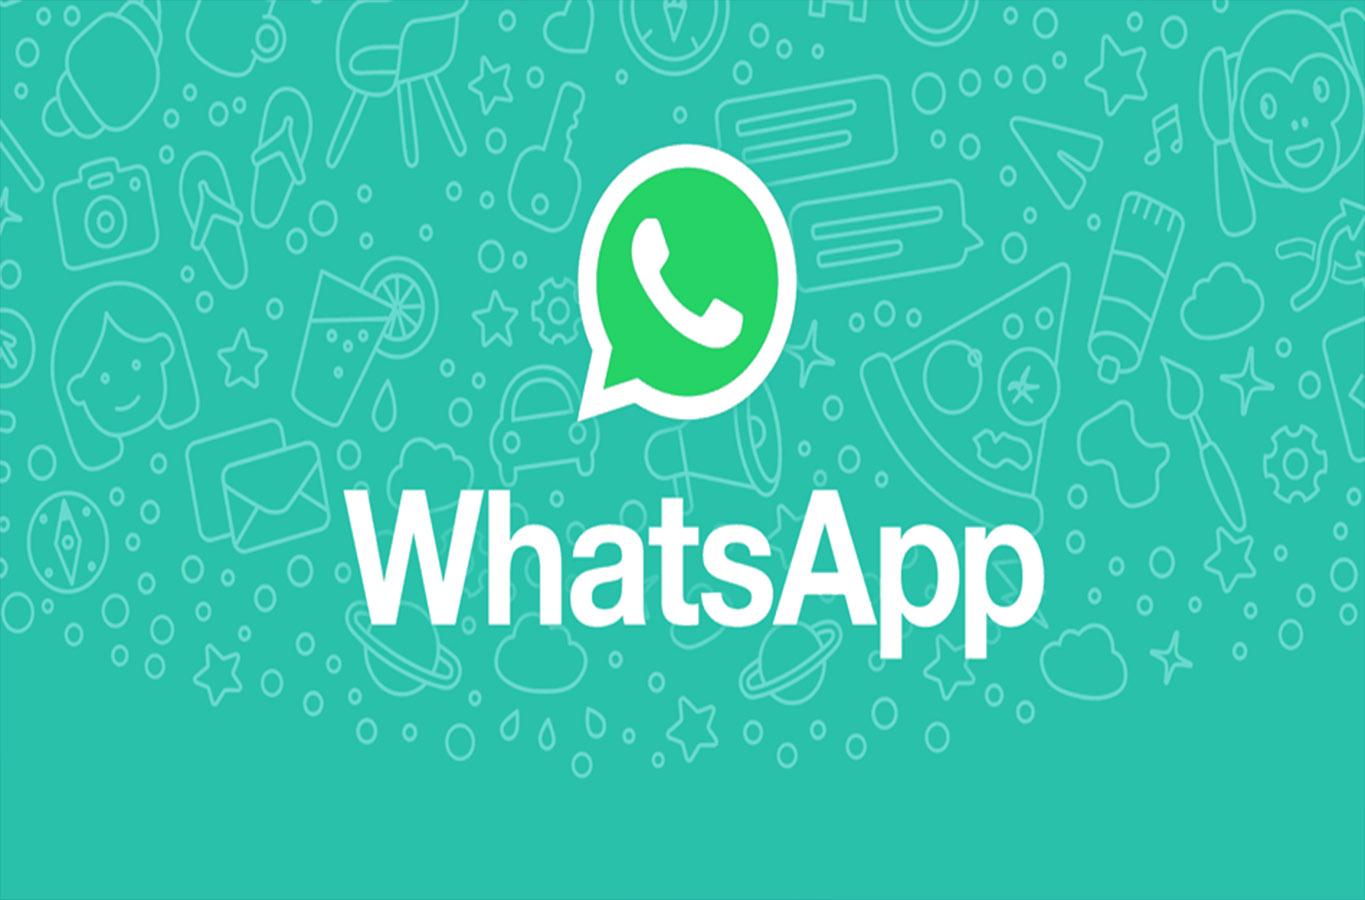 WhatsApp uvodi mogućnost brisanja poruka!